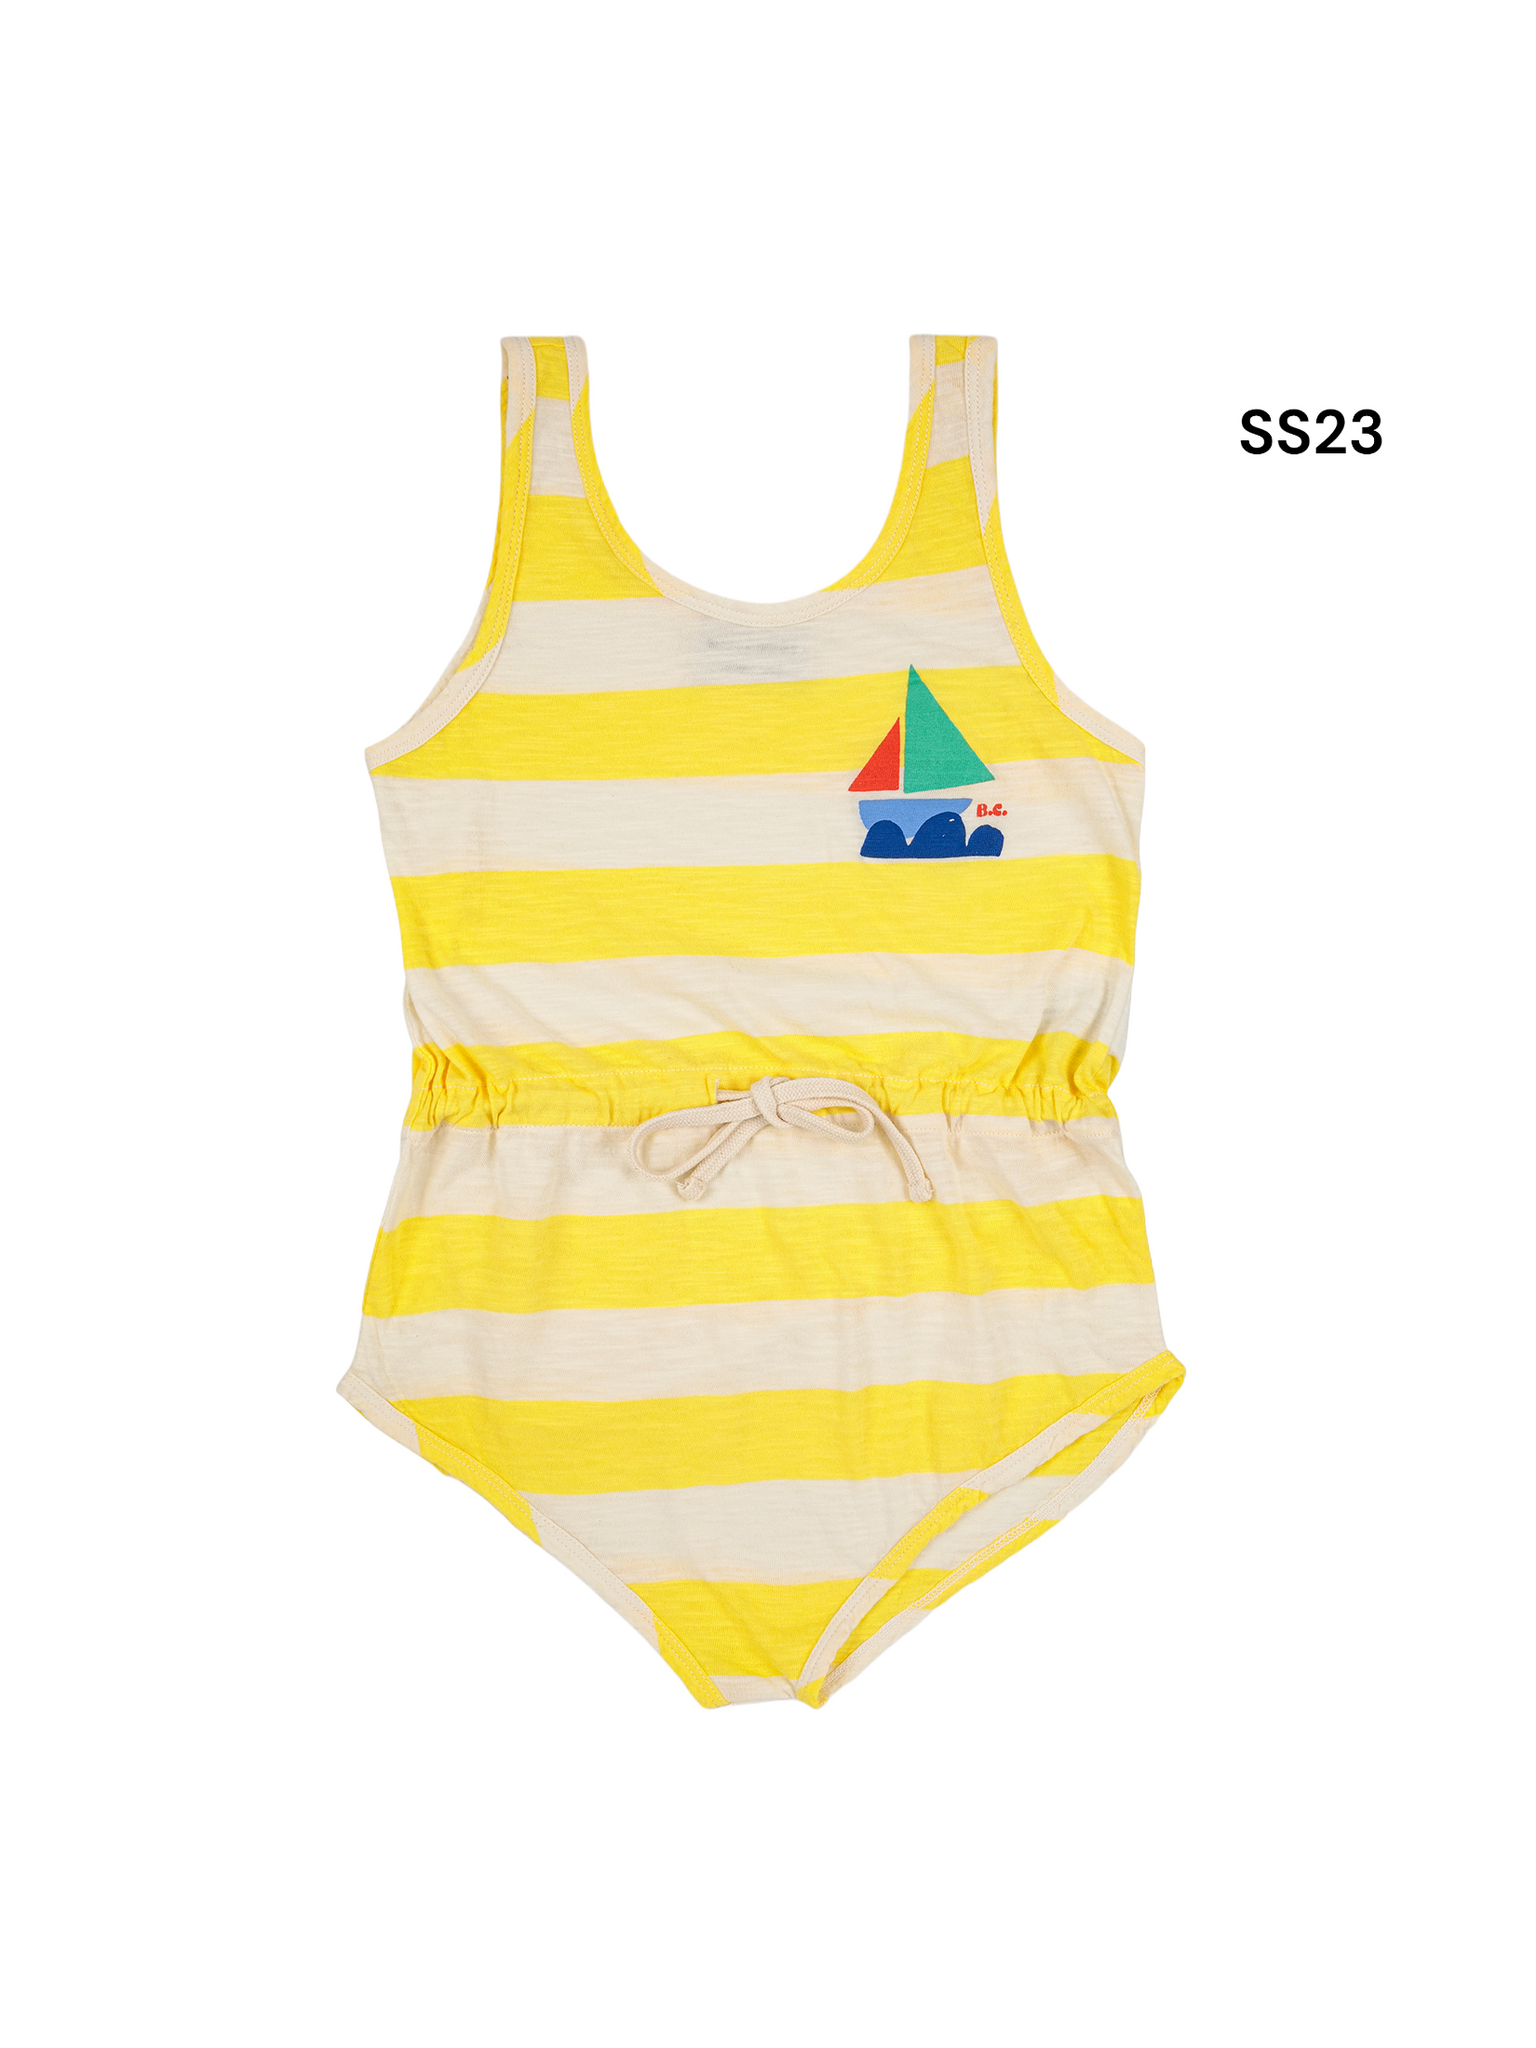 Tuta a righe gialle per neonata e bambina